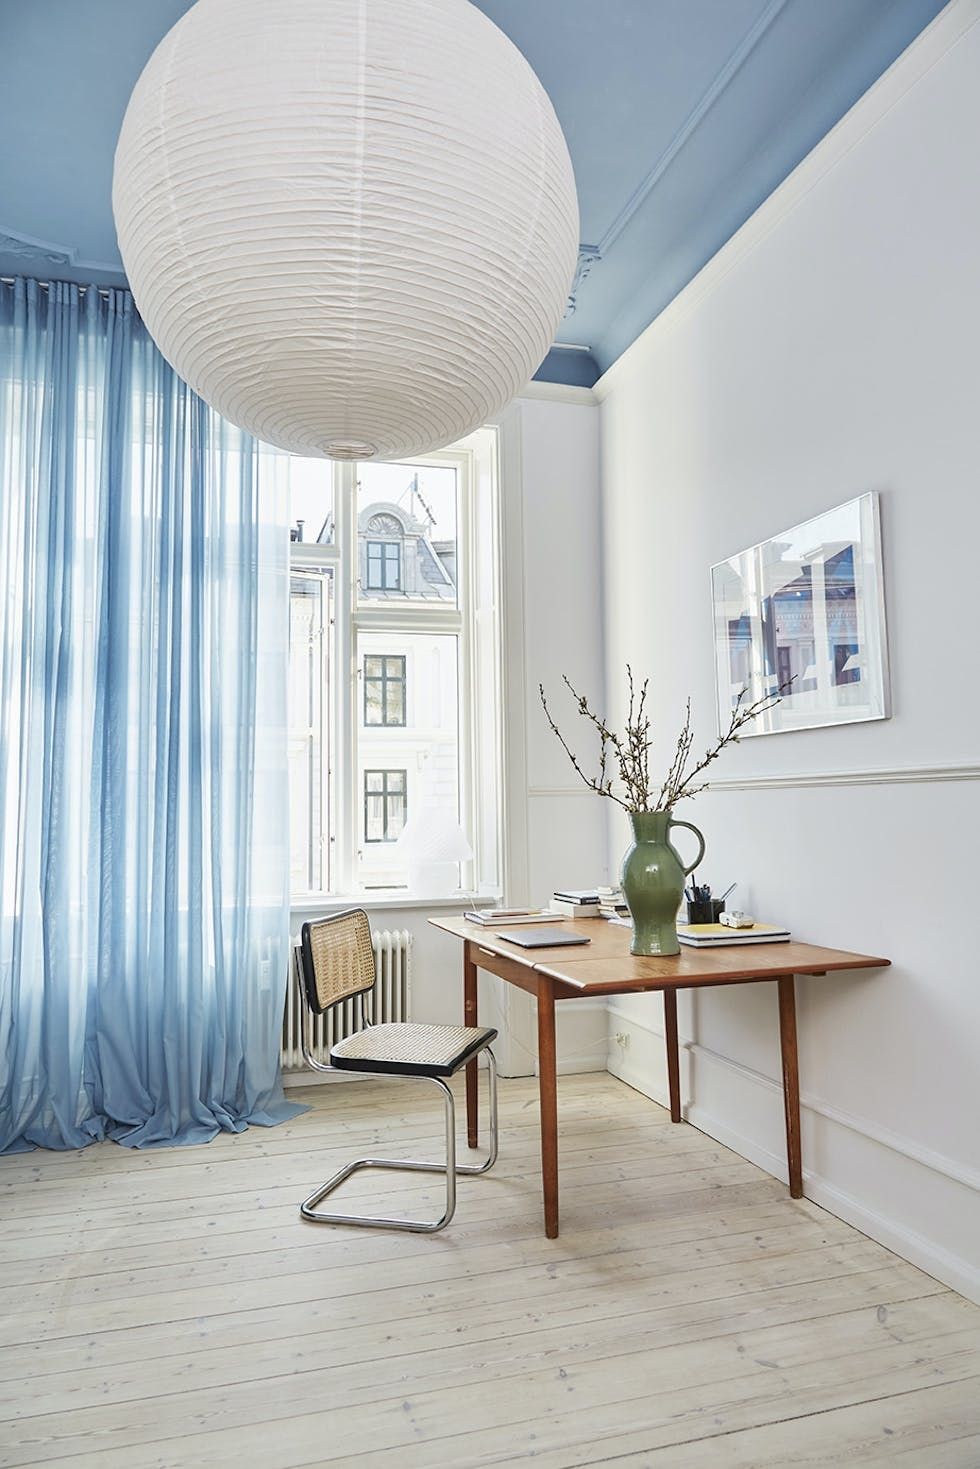 Elegant Décor: Transform Your Space with
Blue Curtains